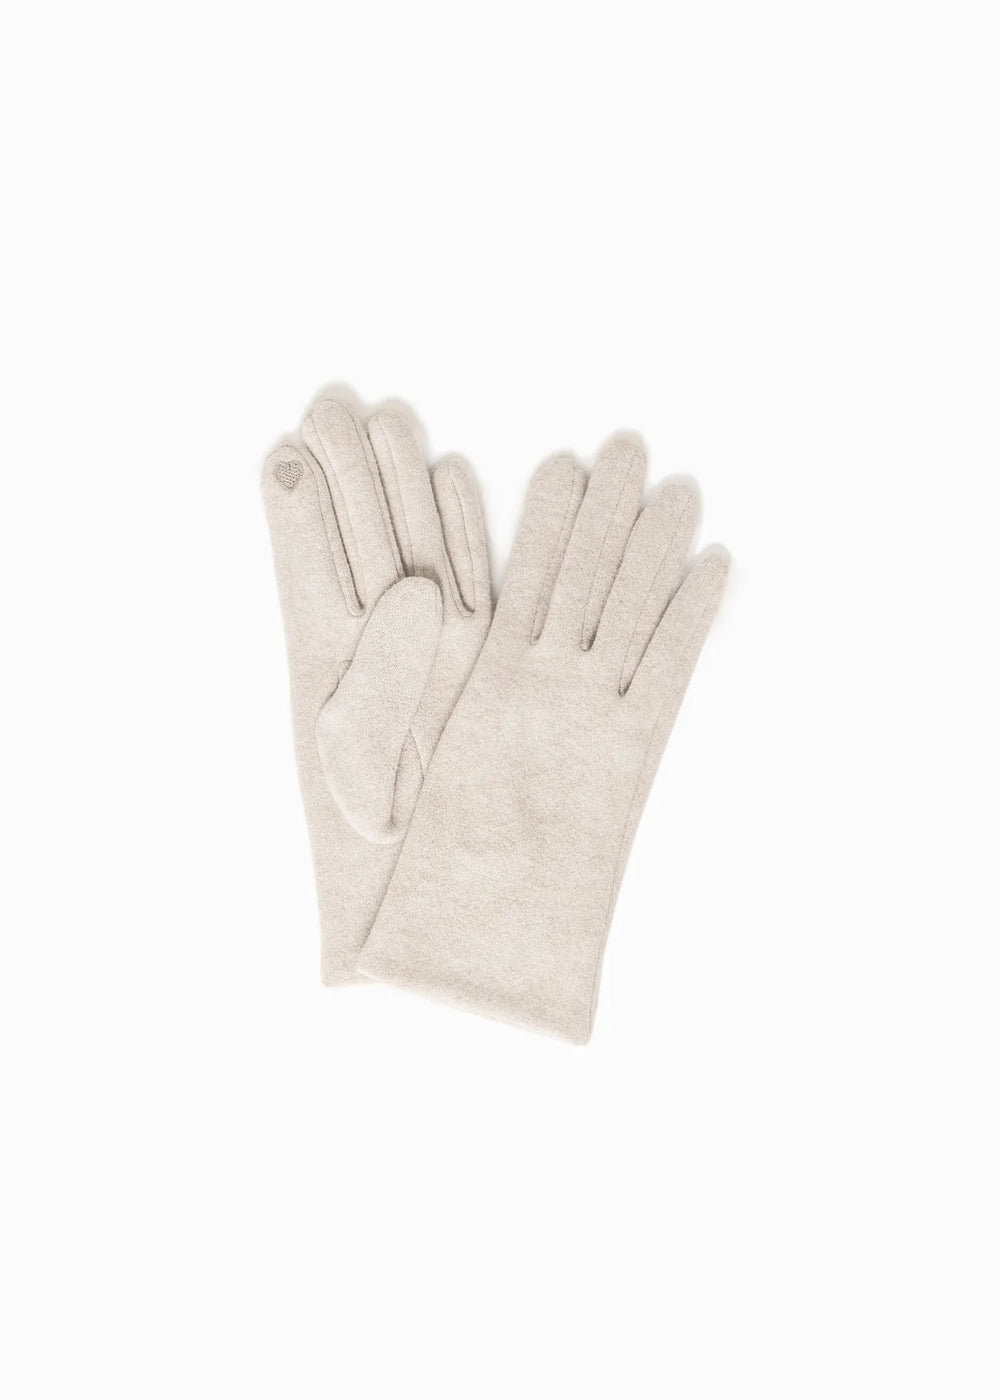 Shari Gloves in Tan - Madison&